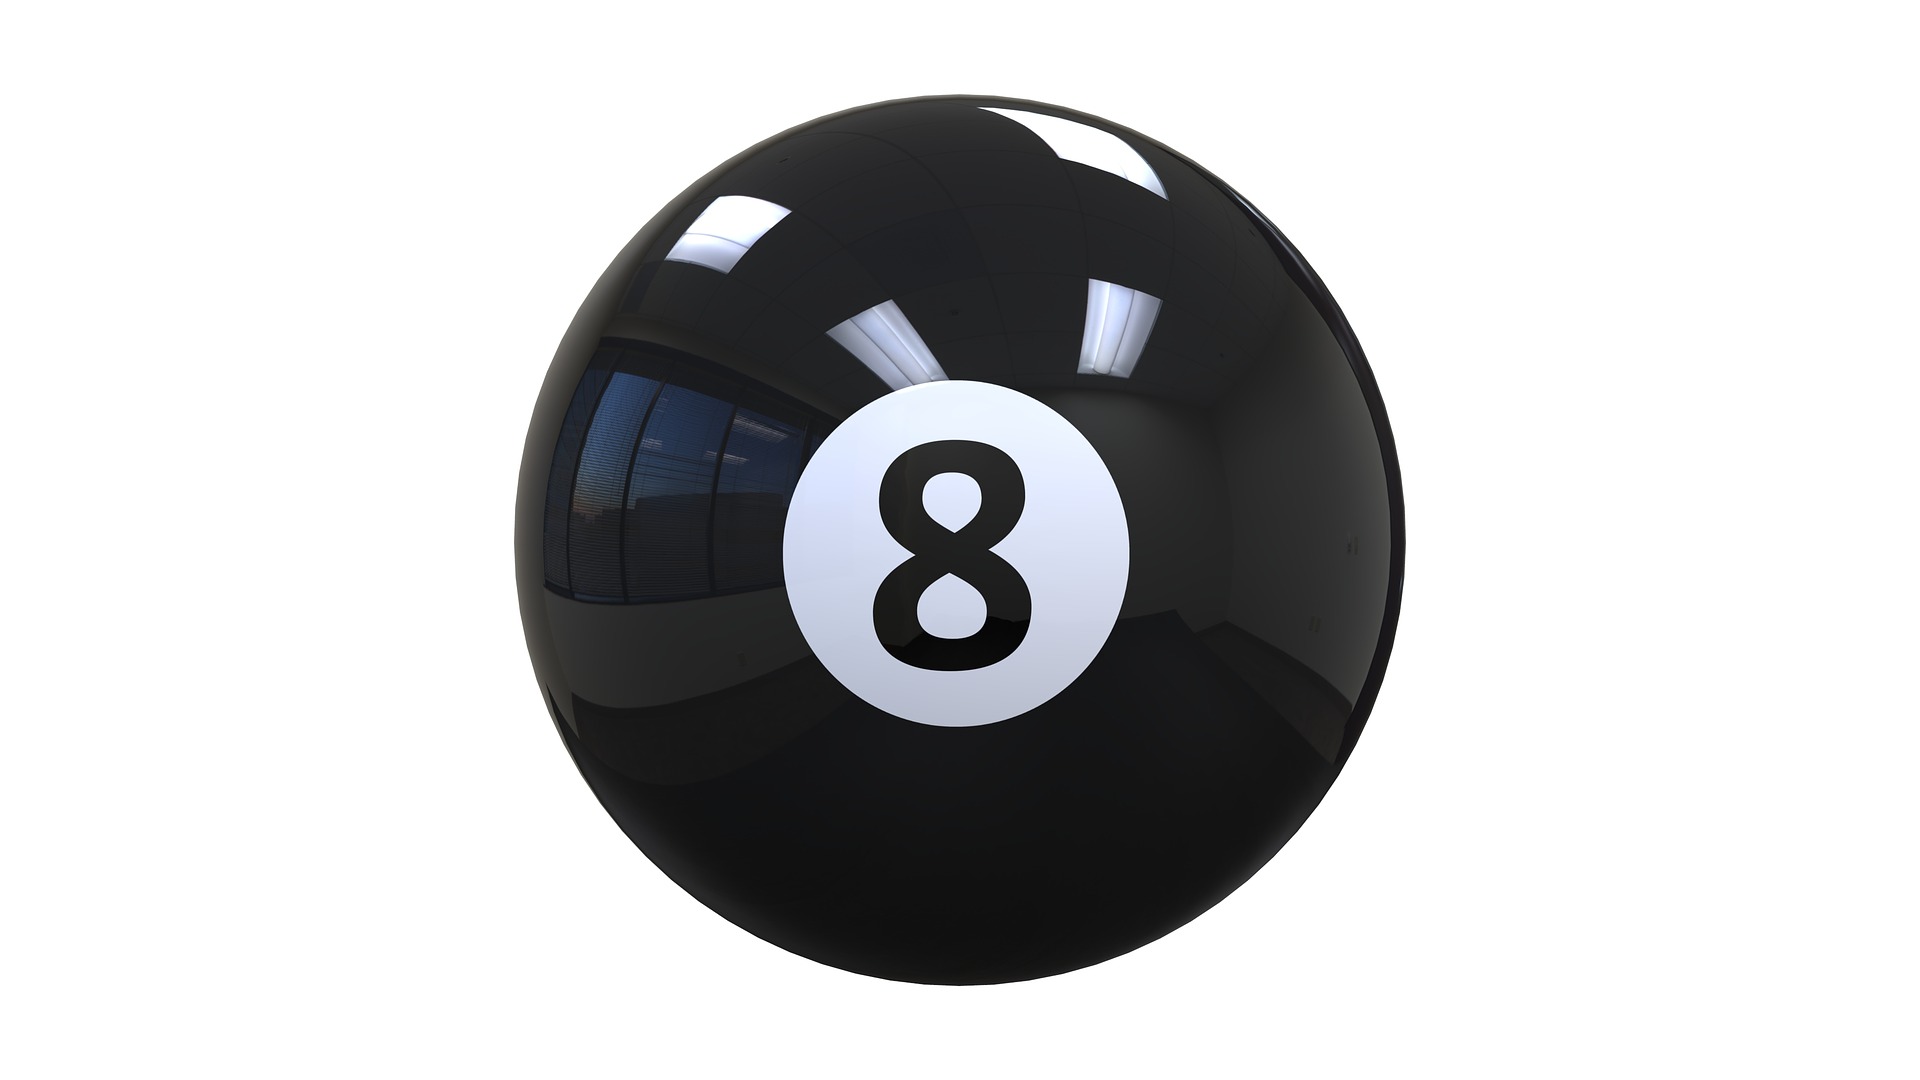 Шар в бильярде 5. Бильярд "8 Ball Pool". Шар для бильярда 8. Бильярдный шар 8 вектор. Бильярдный шар 8 Fallout 3.